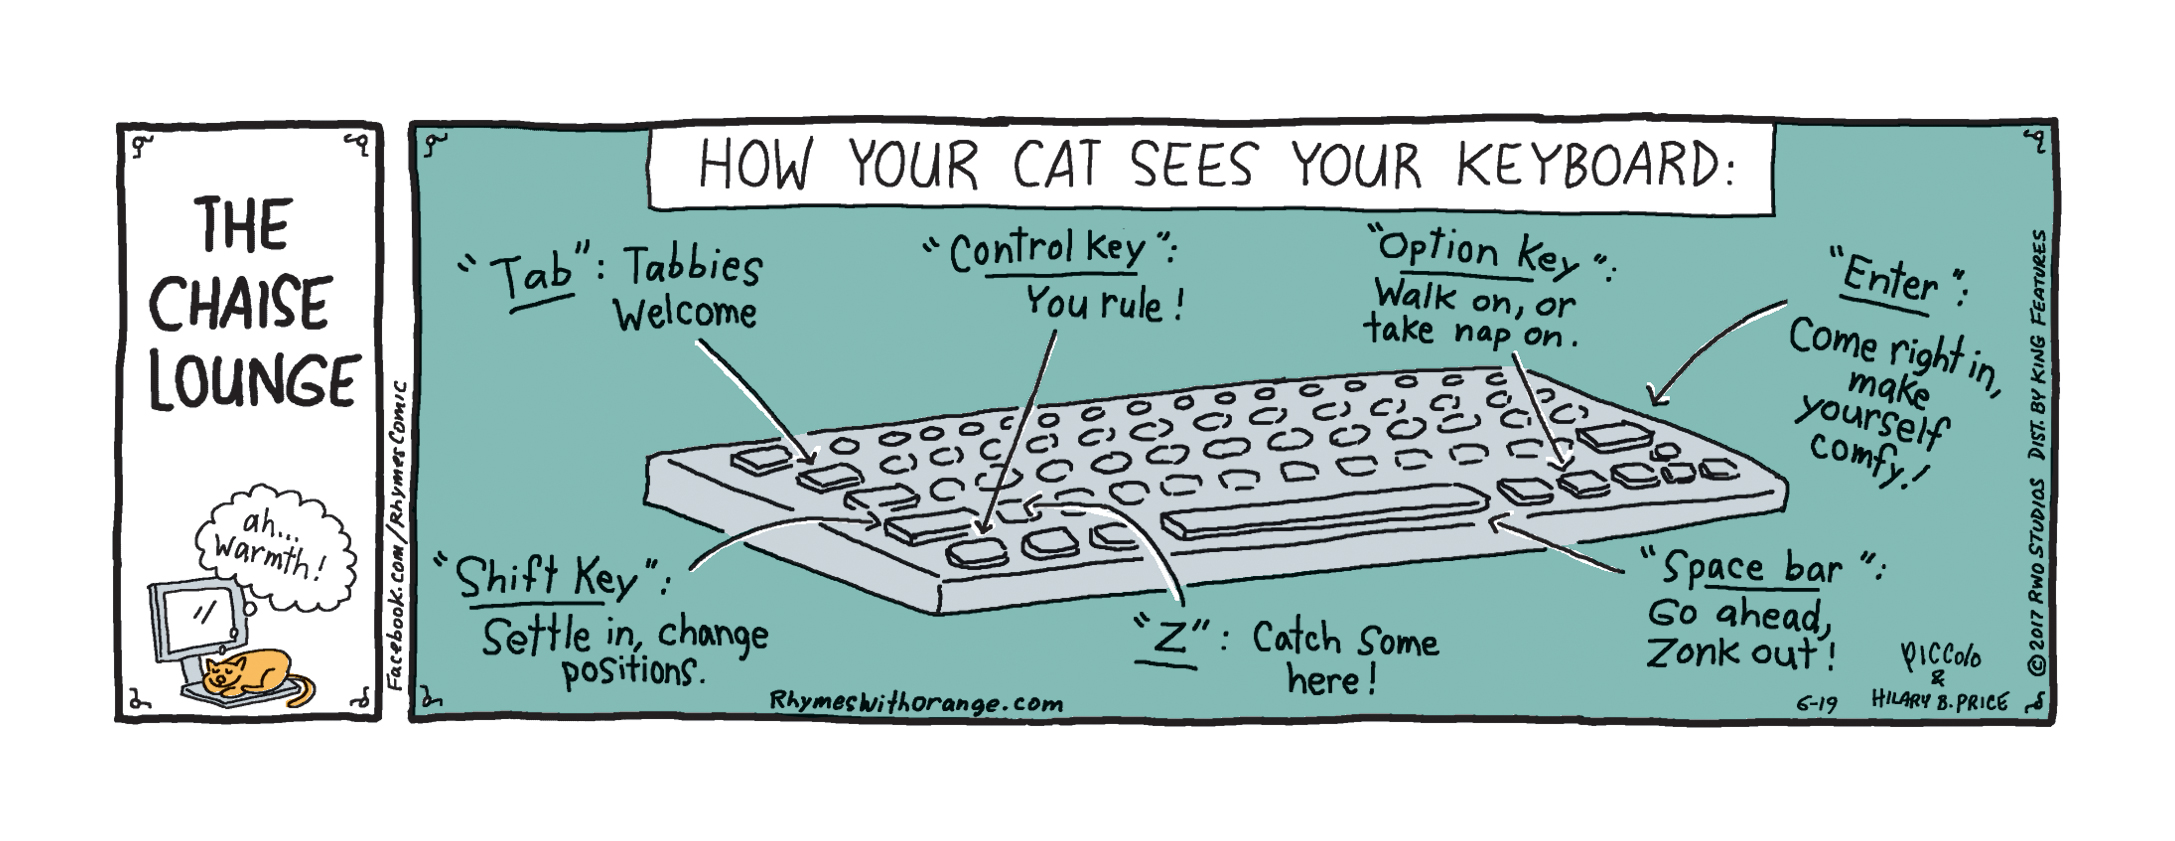 How Cat sees Keyboard.jpg